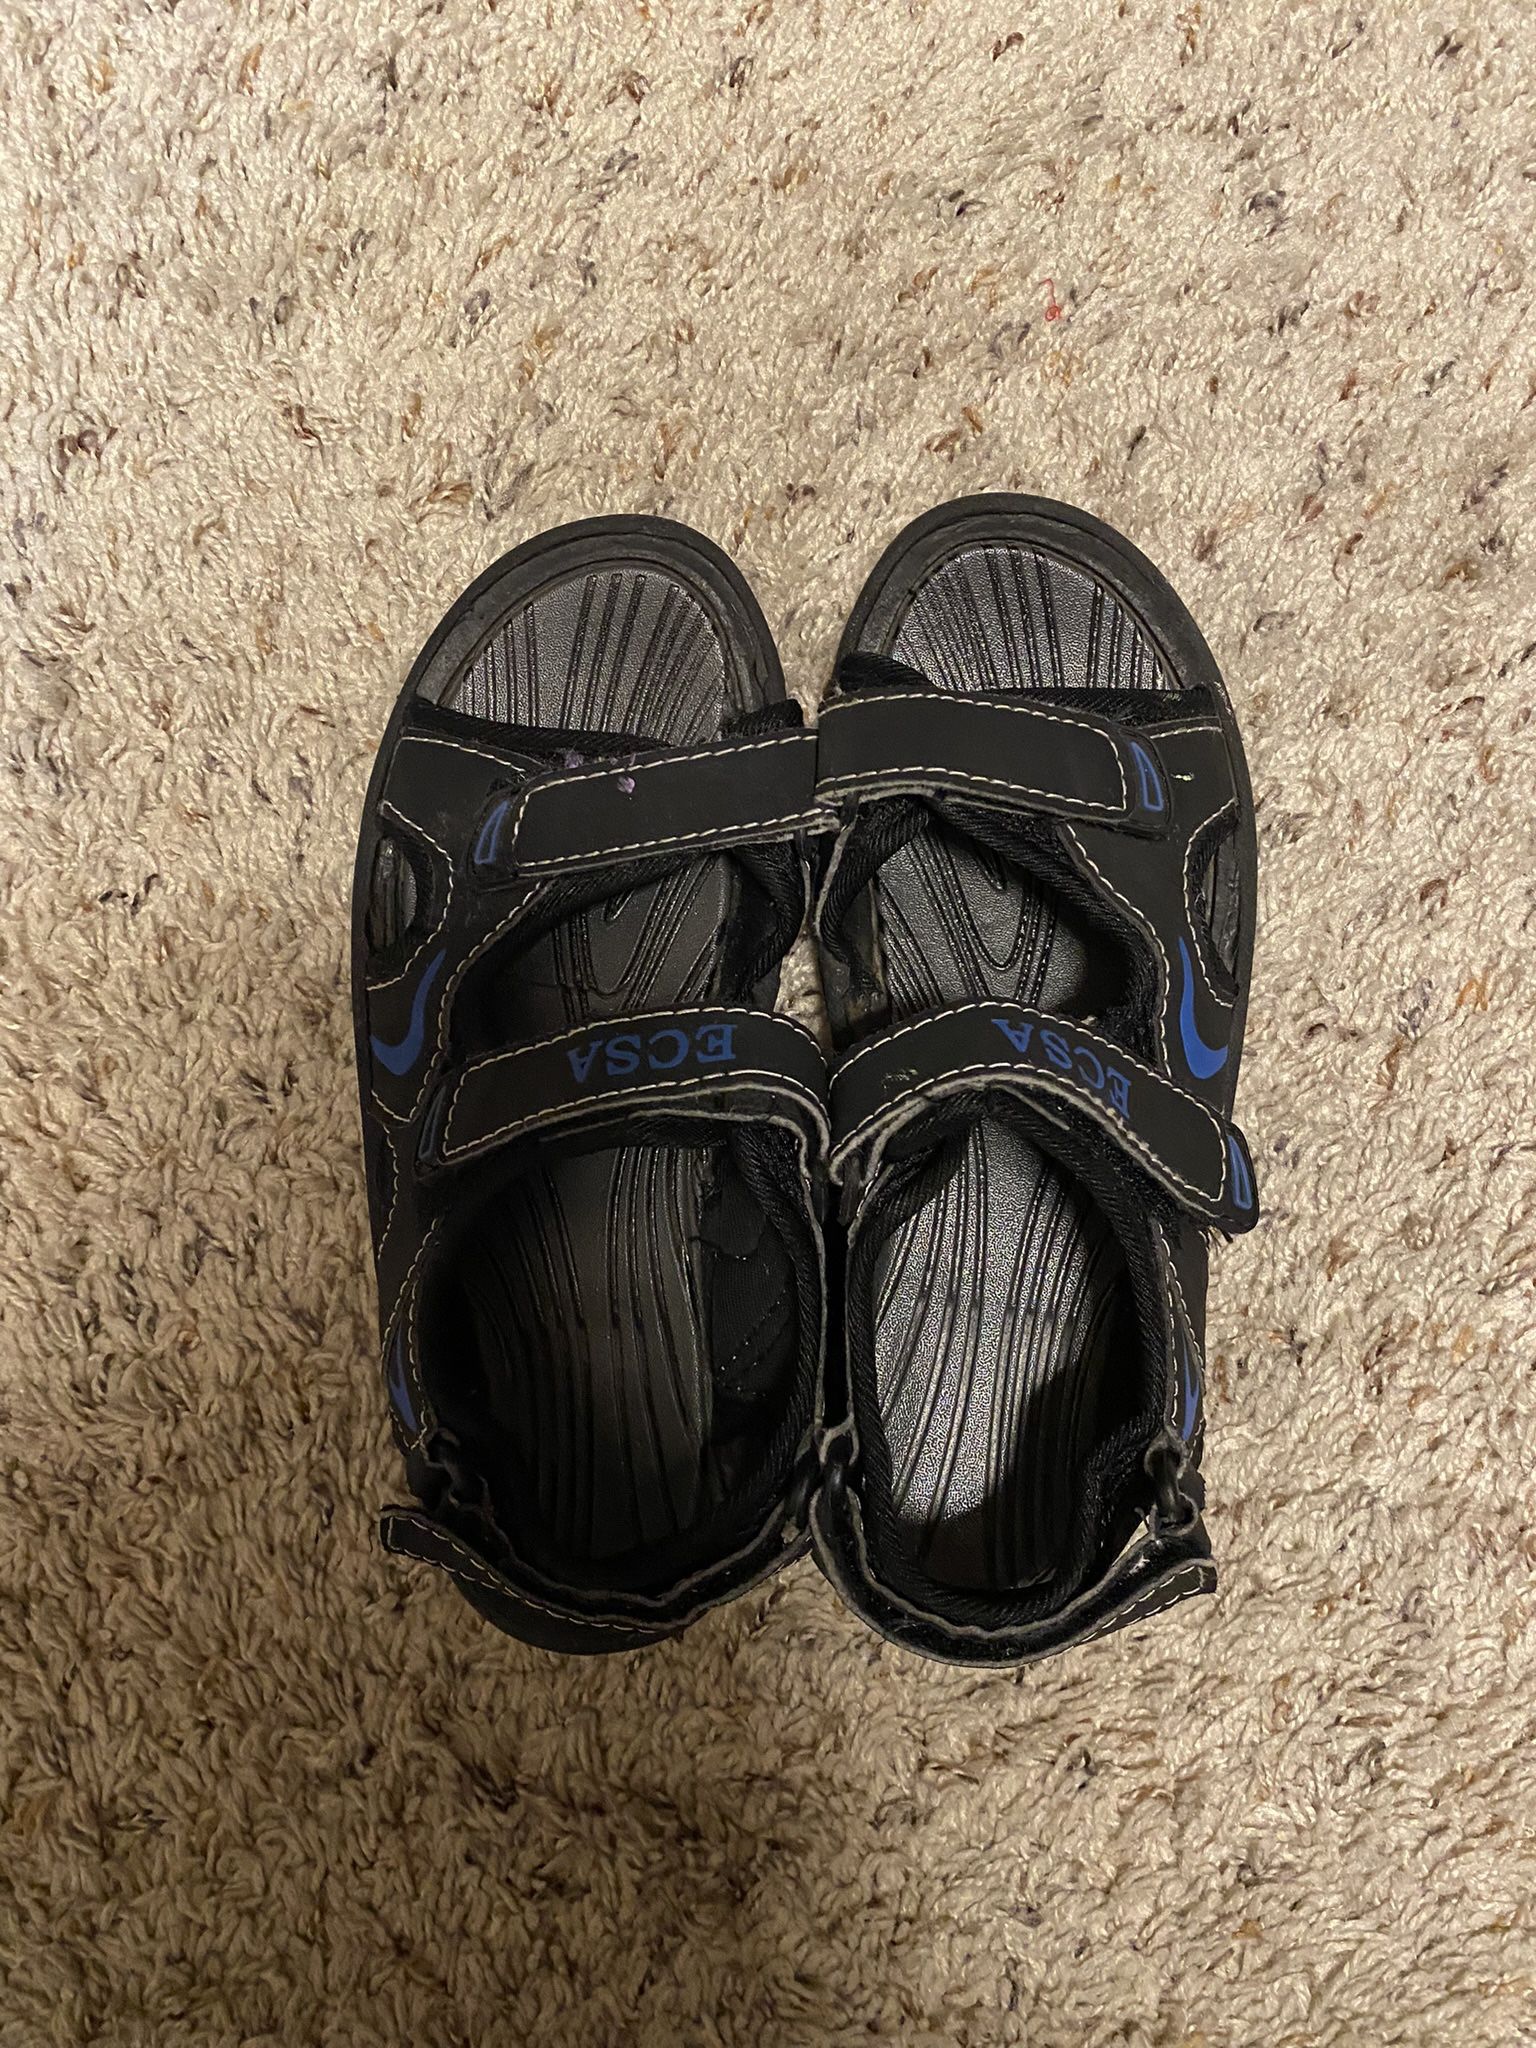 Boys Sandals Size 7 $8